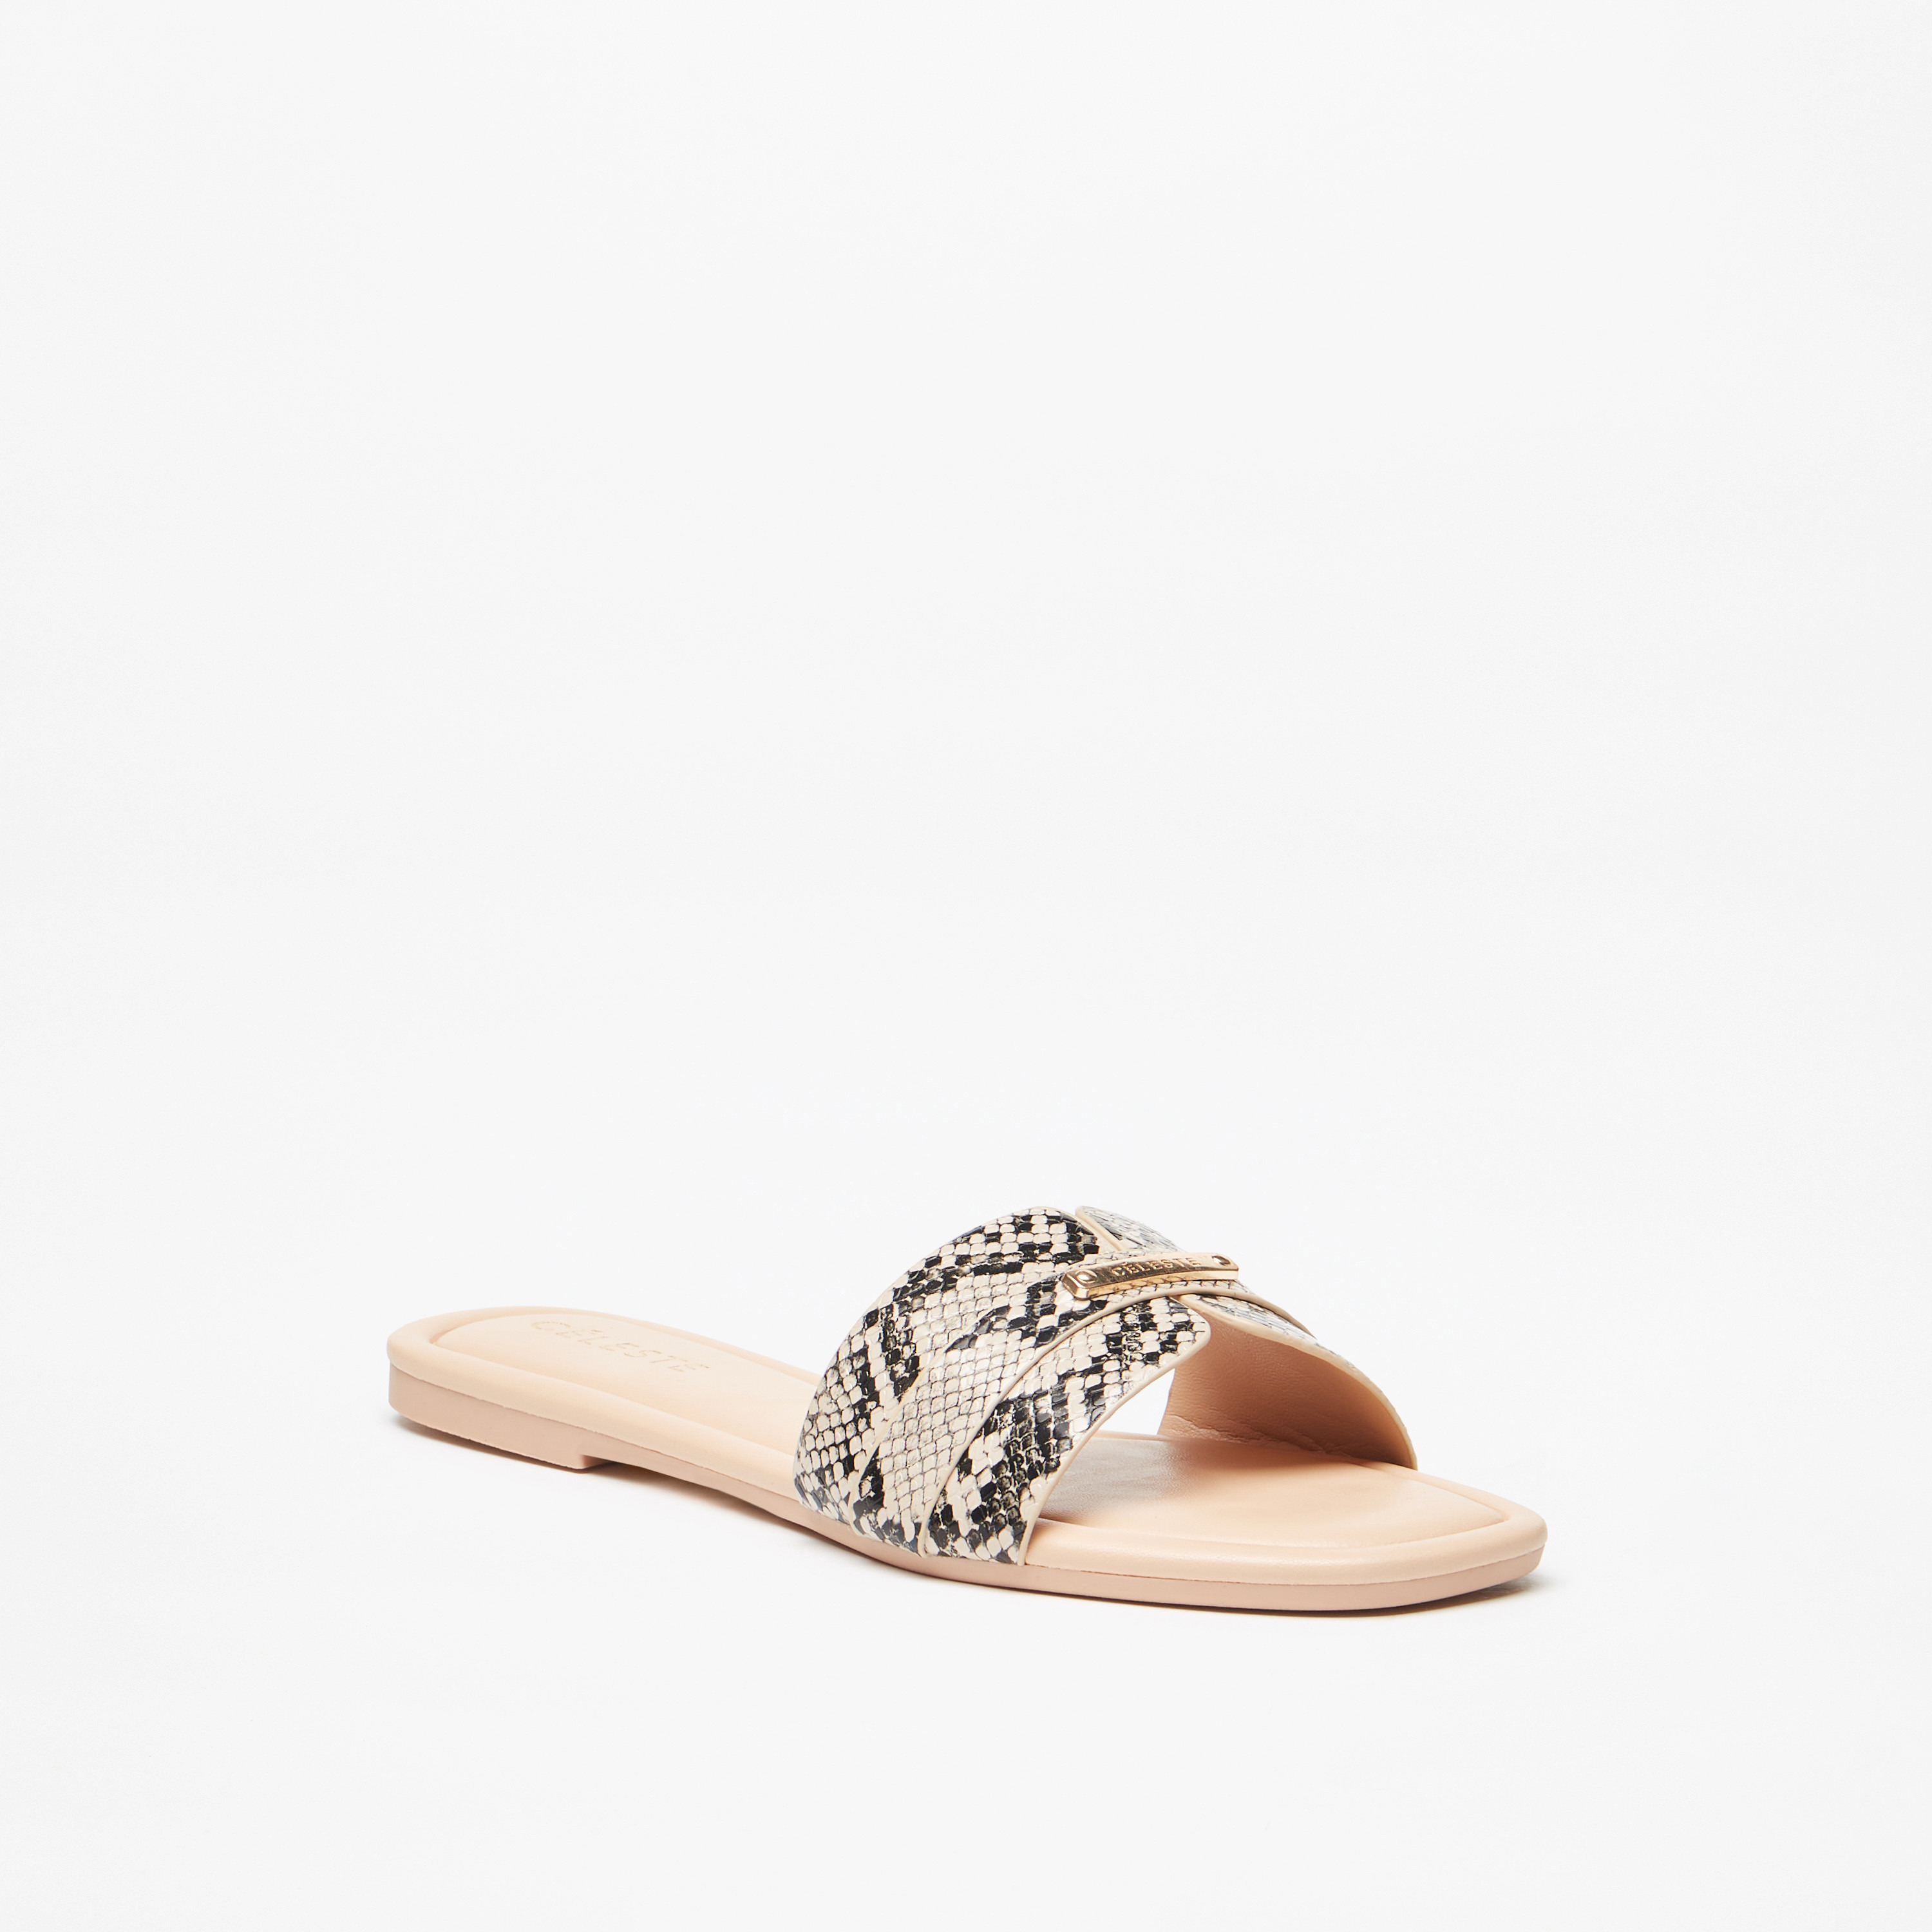 Buy Sandals for Girls Online | Crocs UAE